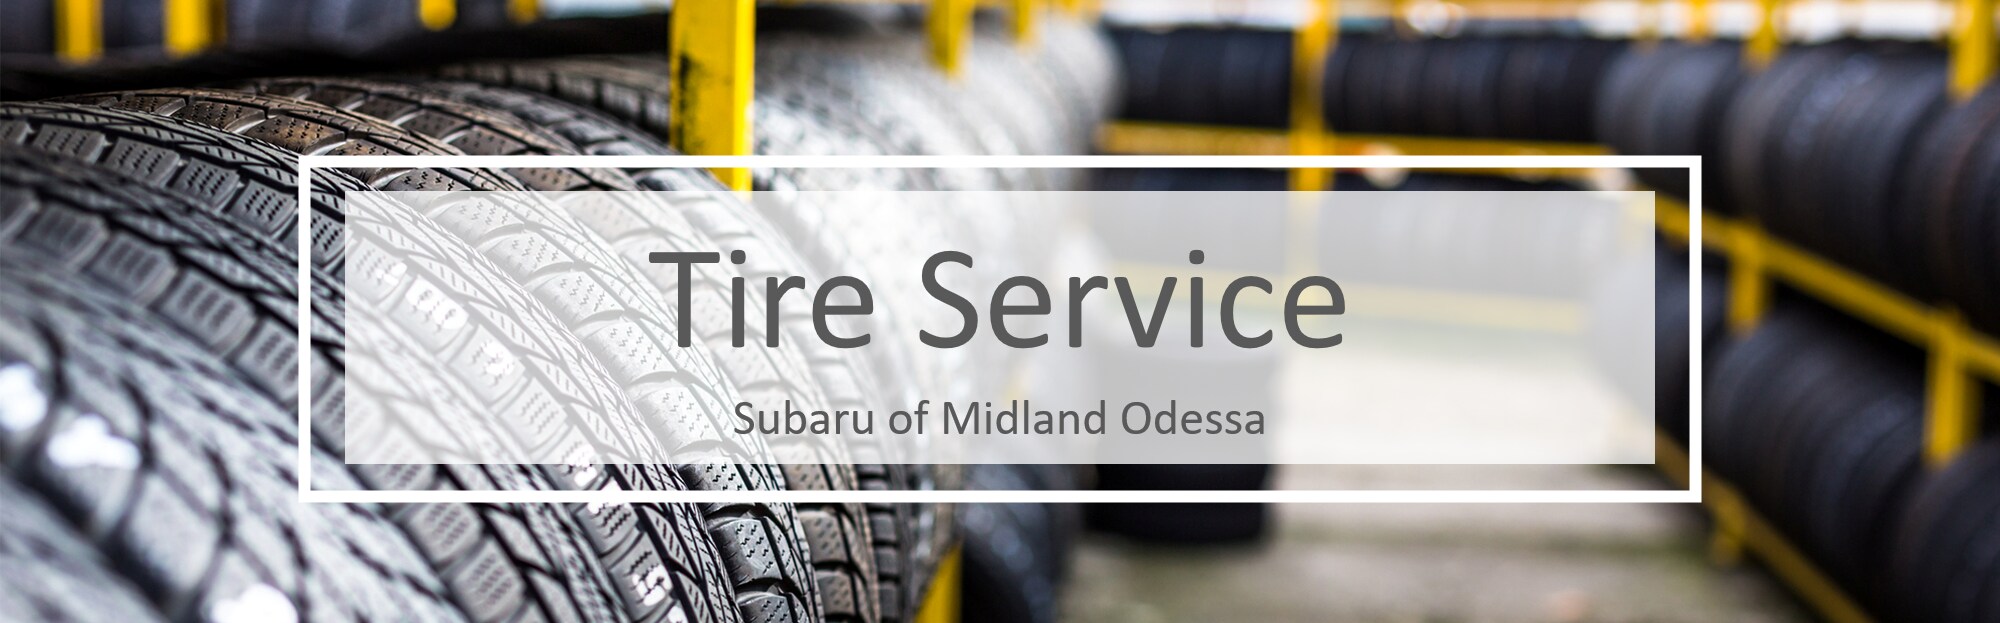 Tire Service at Subaru of Midland Odessa